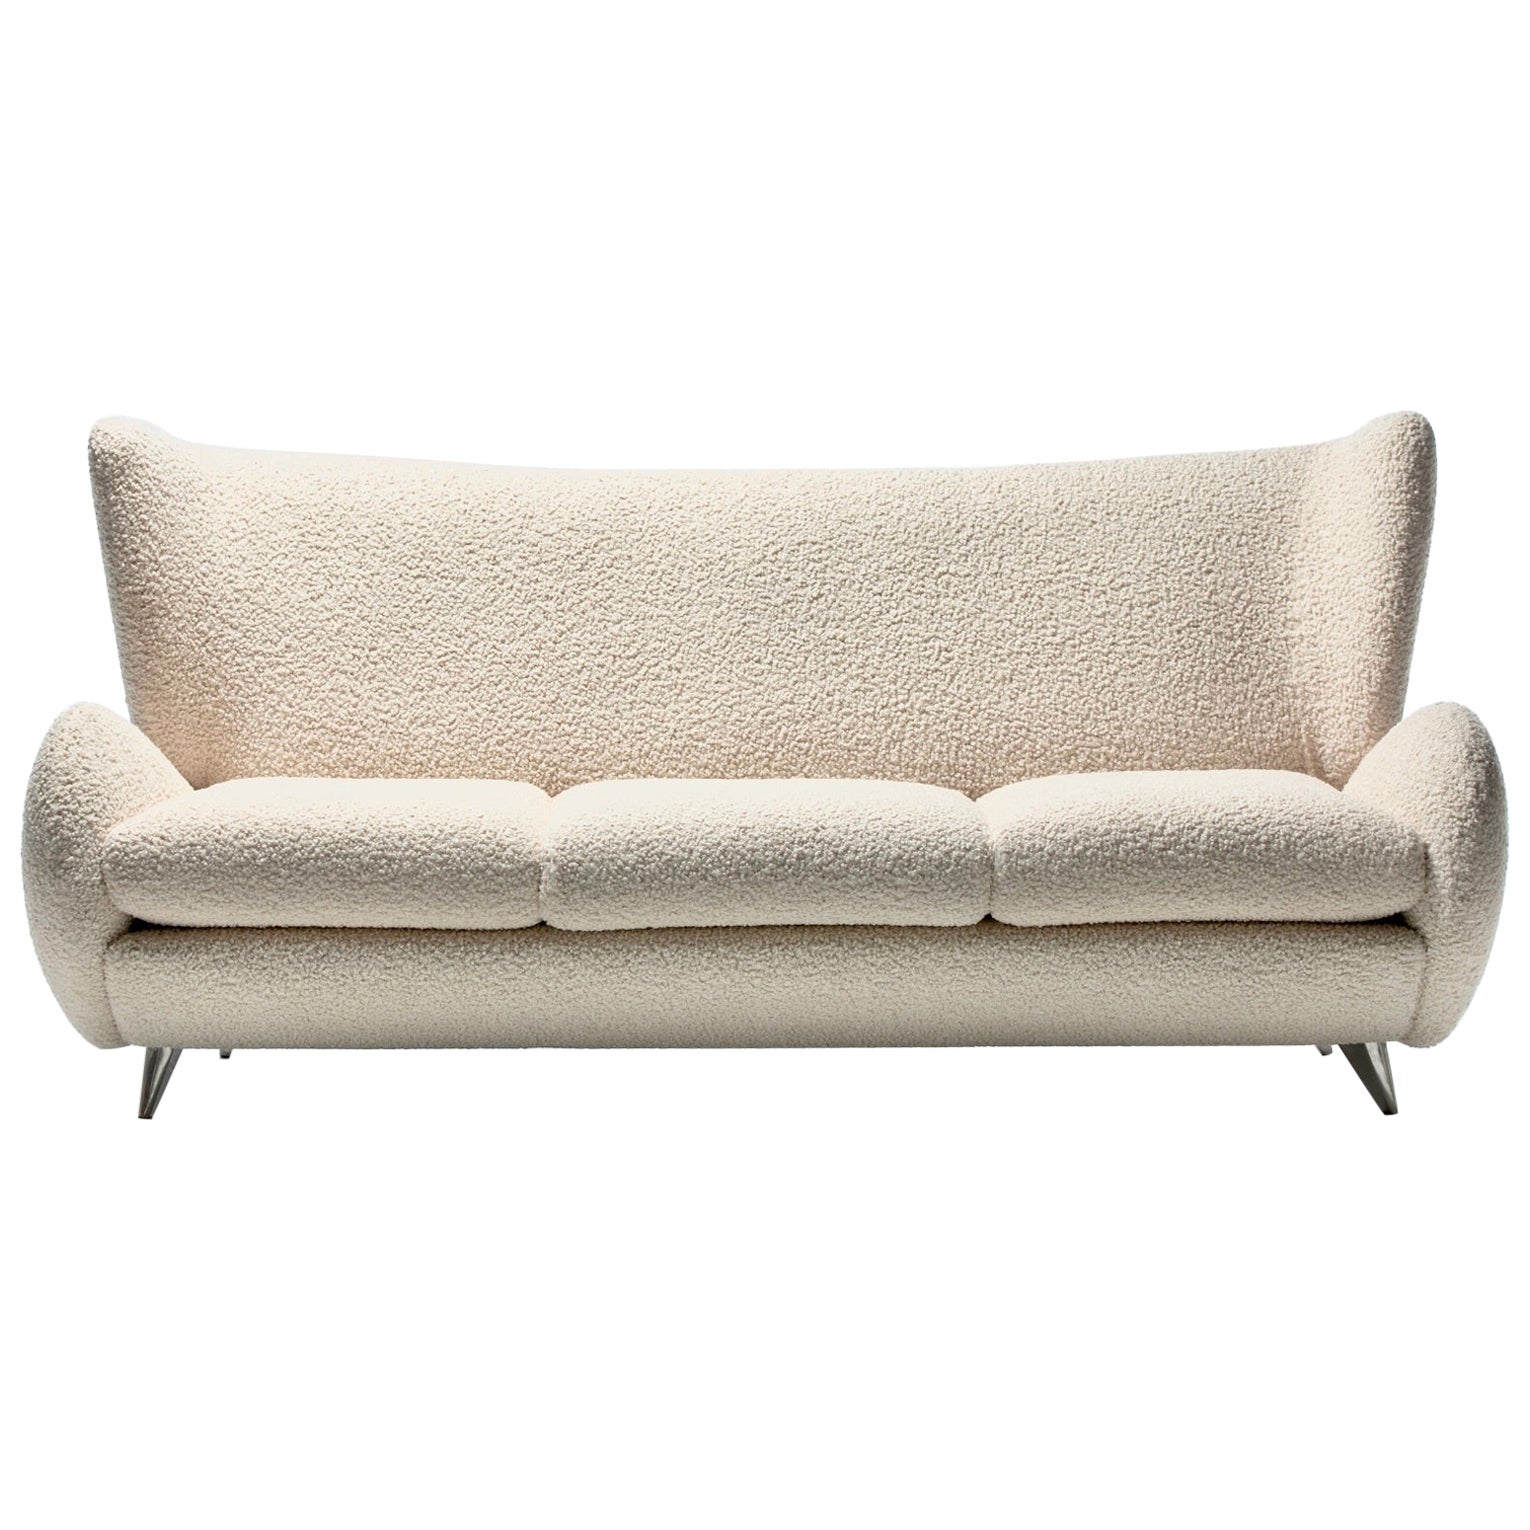 Vladimir Kagan Fiftyish Sofa in Super Soft Ivory White Bouclé